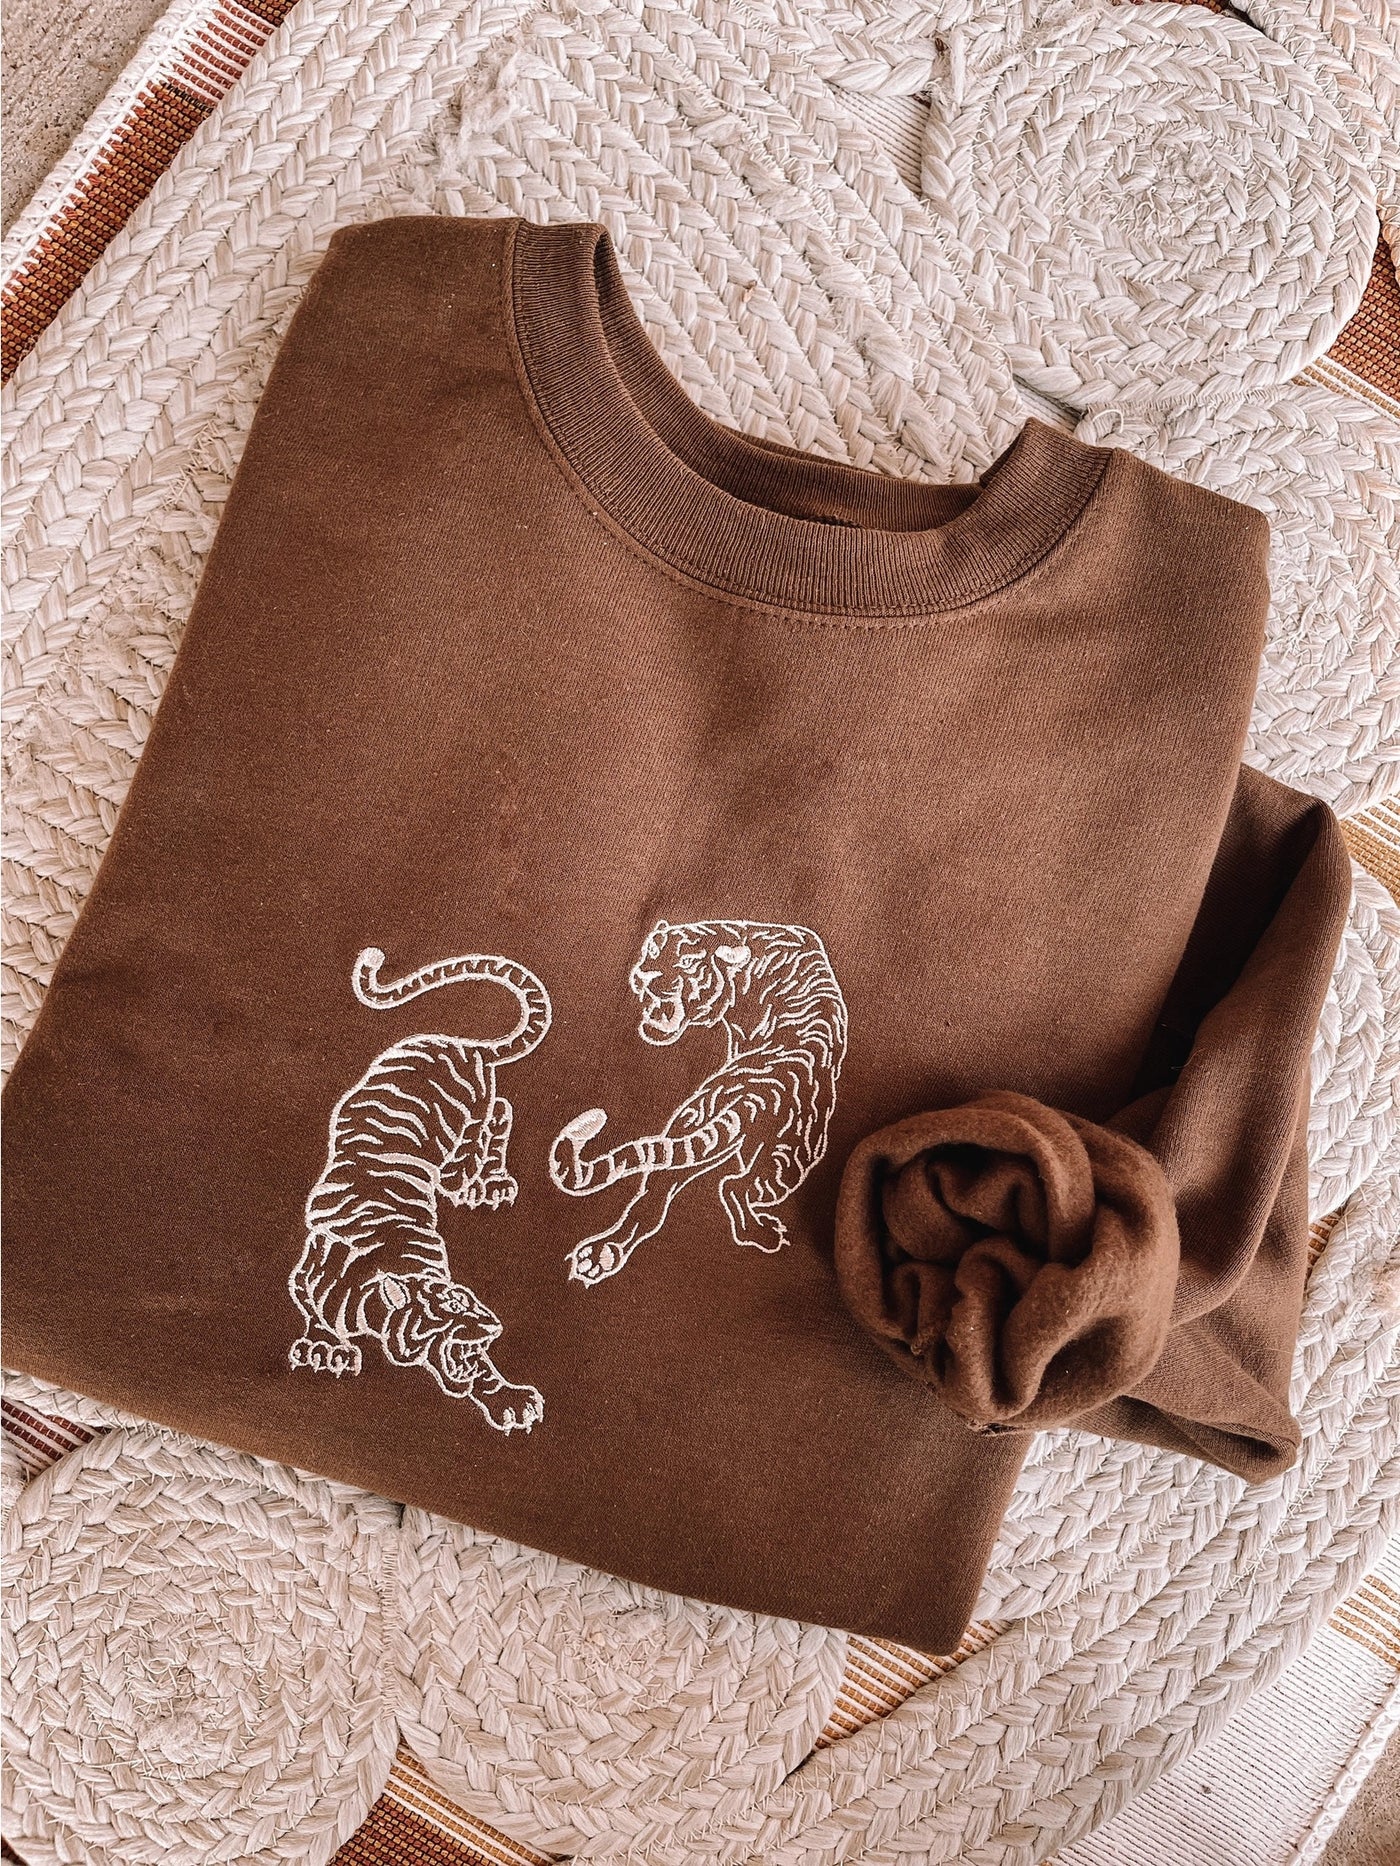 Embroidered Tiger Sweatshirt Brown